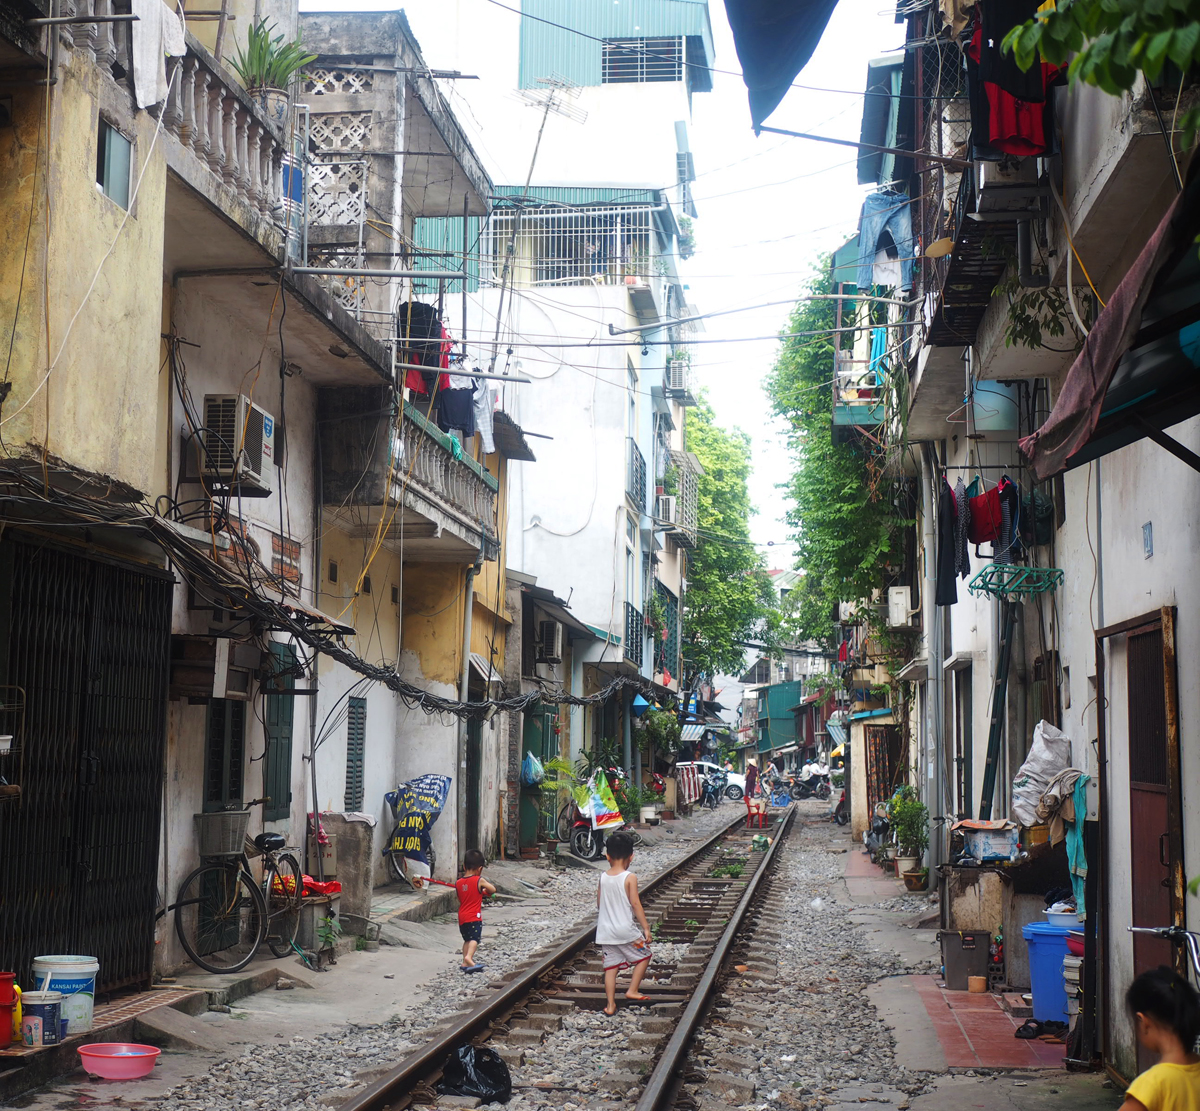 Pictures of Hanoi Old Quarter